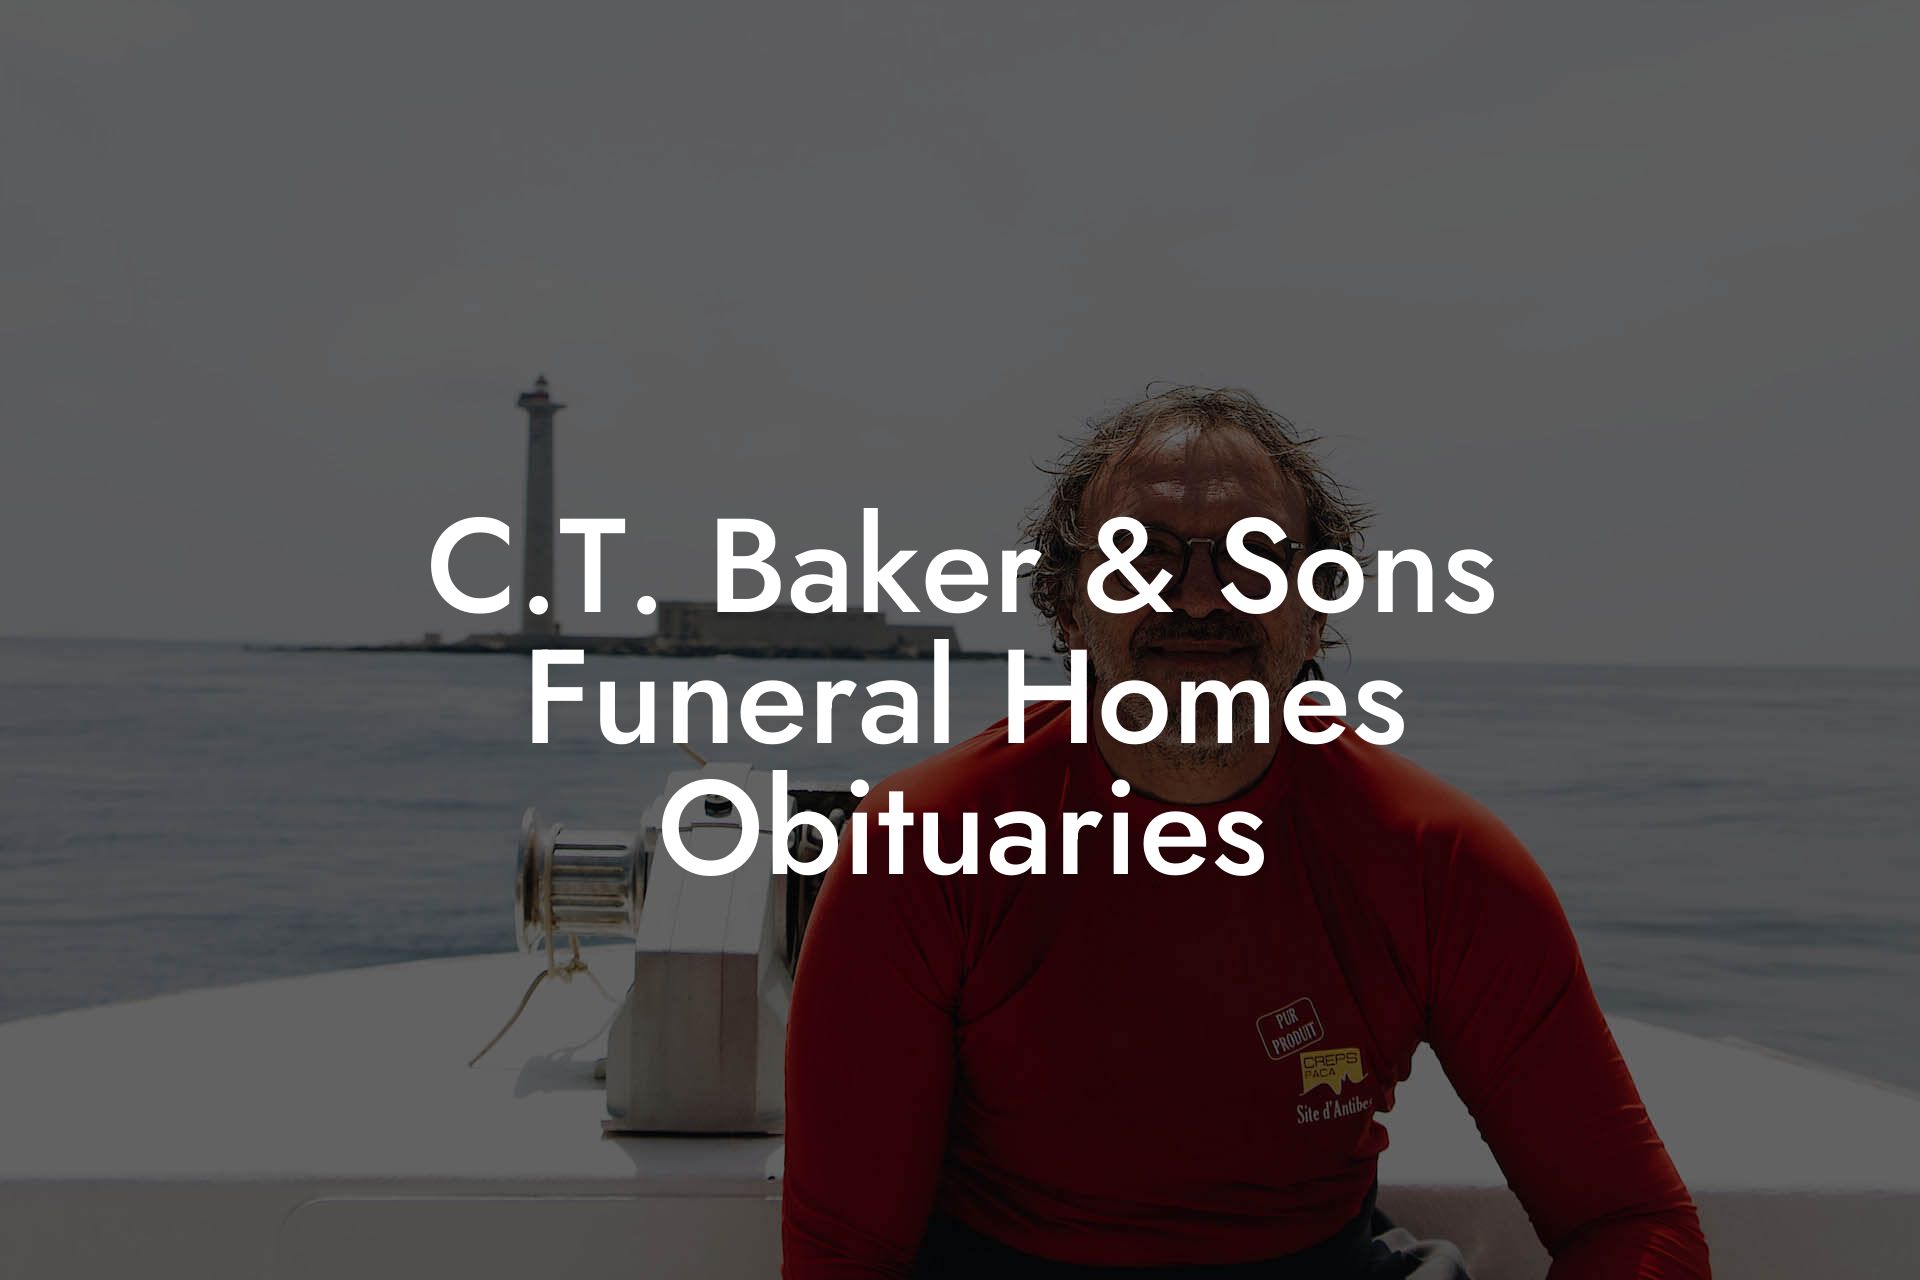 C.T. Baker & Sons Funeral Homes Obituaries